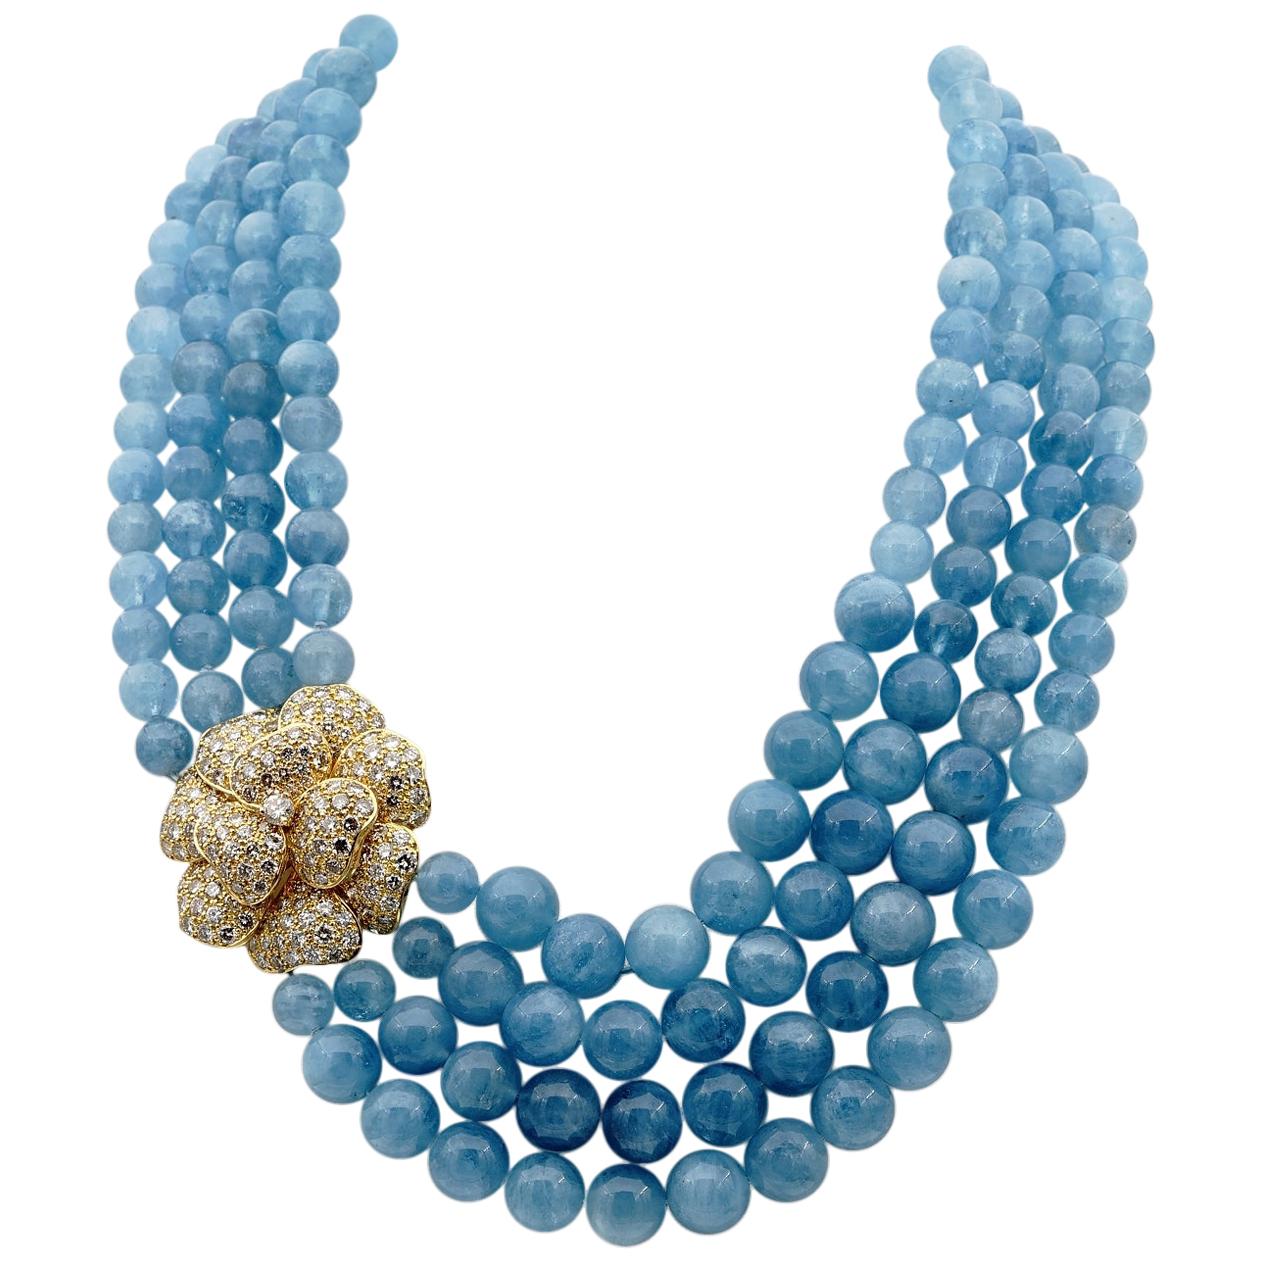  Giovane Aquamarine 8.20 Carat Diamond High End Necklace For Sale